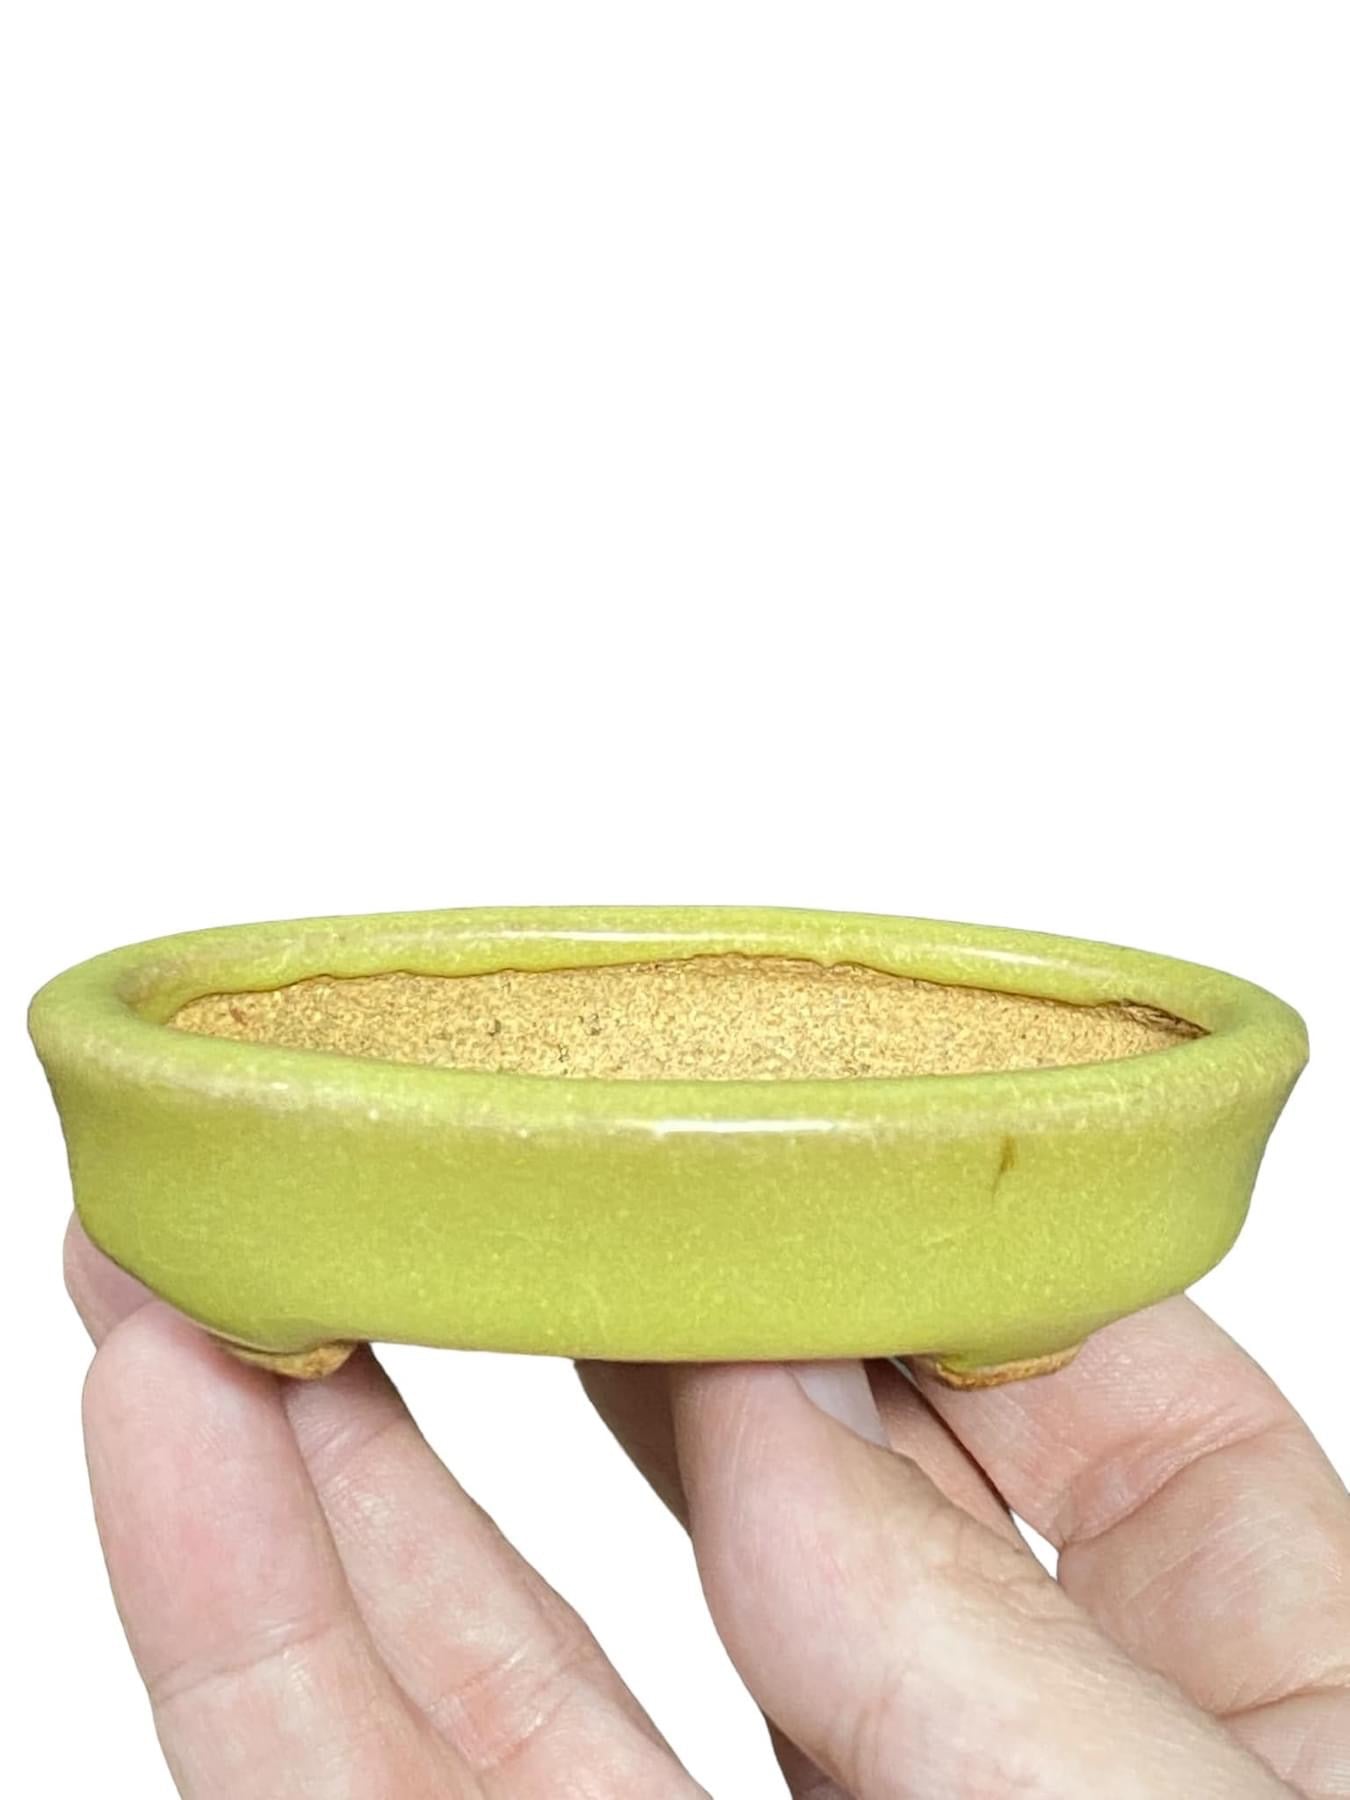 Hattori - Rare Older Yellow Oval Bonsai Pot